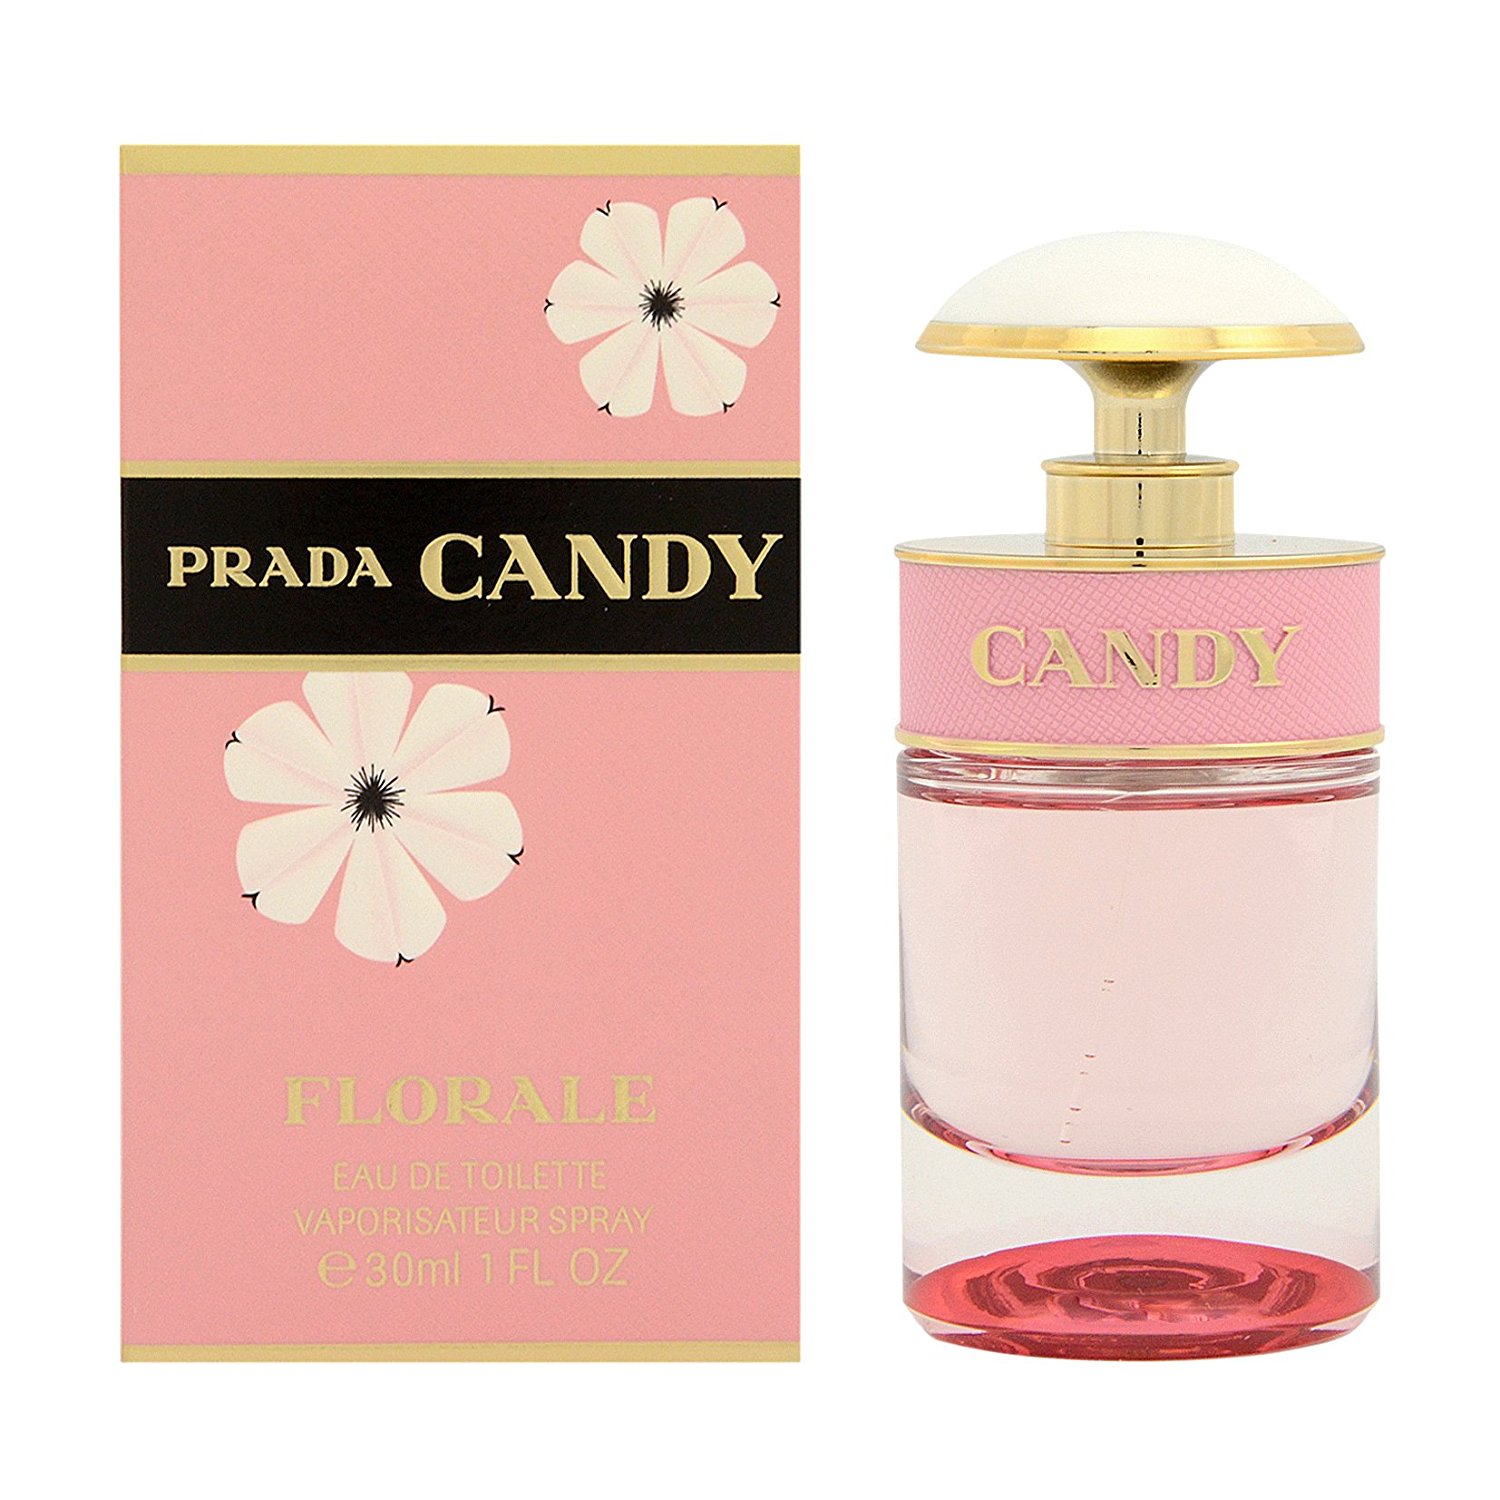 Nước hoa Prada Candy - Florale 7ml (EDT)